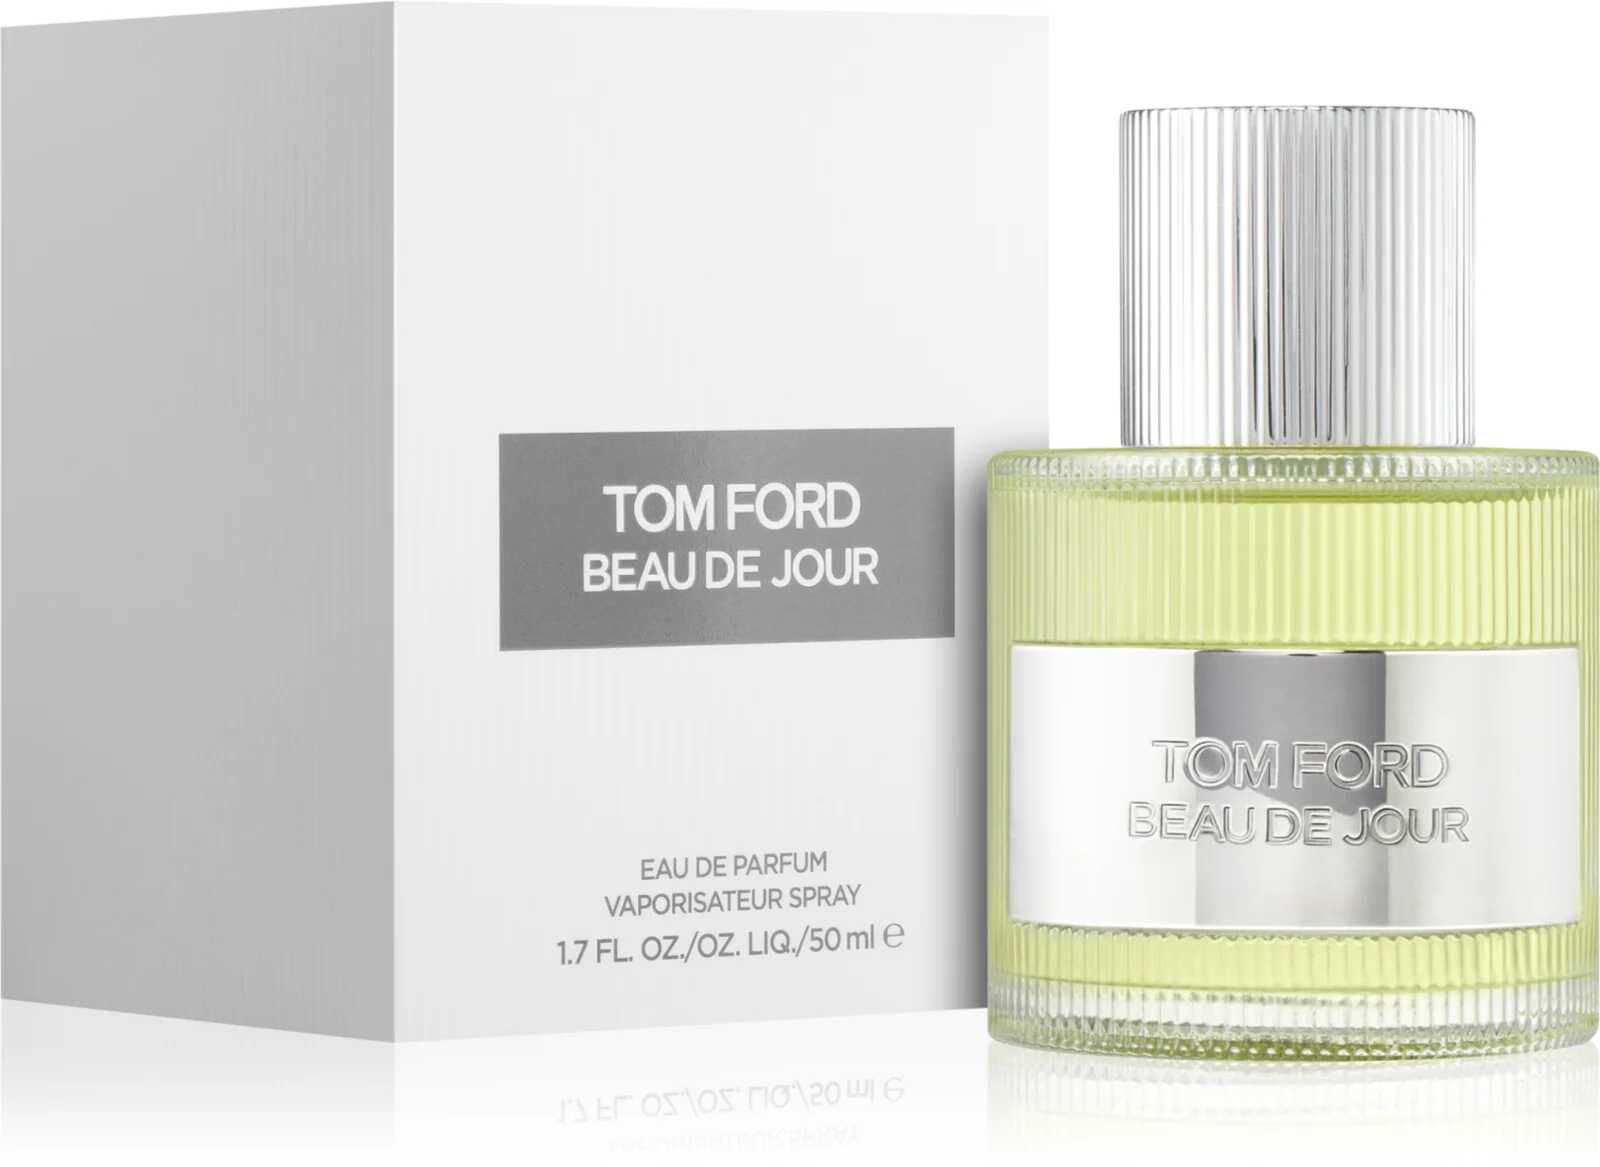 Tom Ford Beau de Jour Eau de Parfum 50ml für 77,80€ statt 95,95€